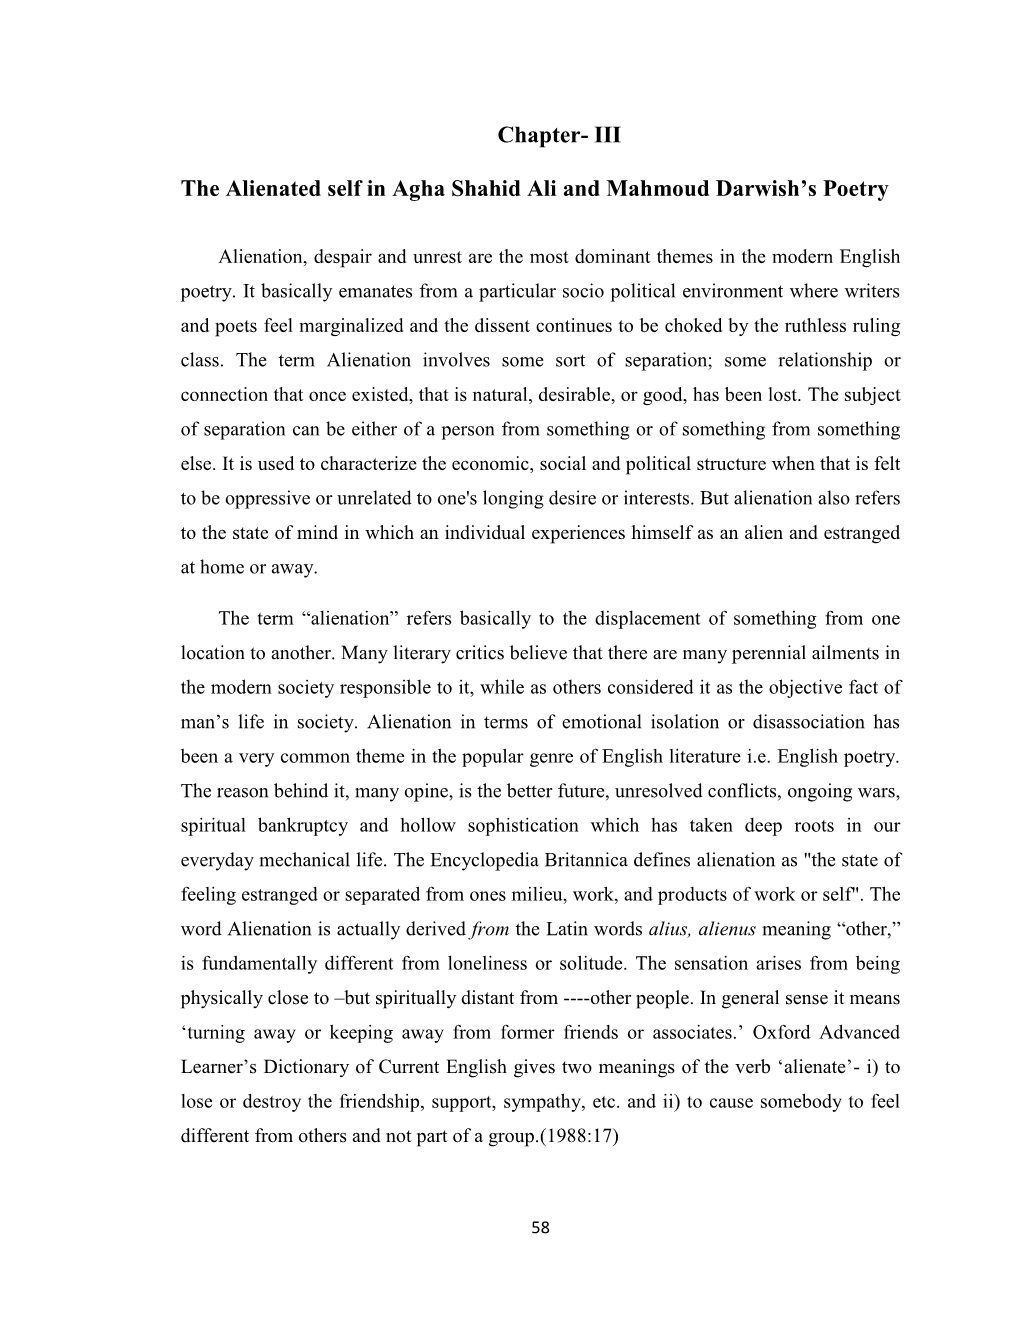 Chapter- III the Alienated Self in Agha Shahid Ali and Mahmoud Darwish's